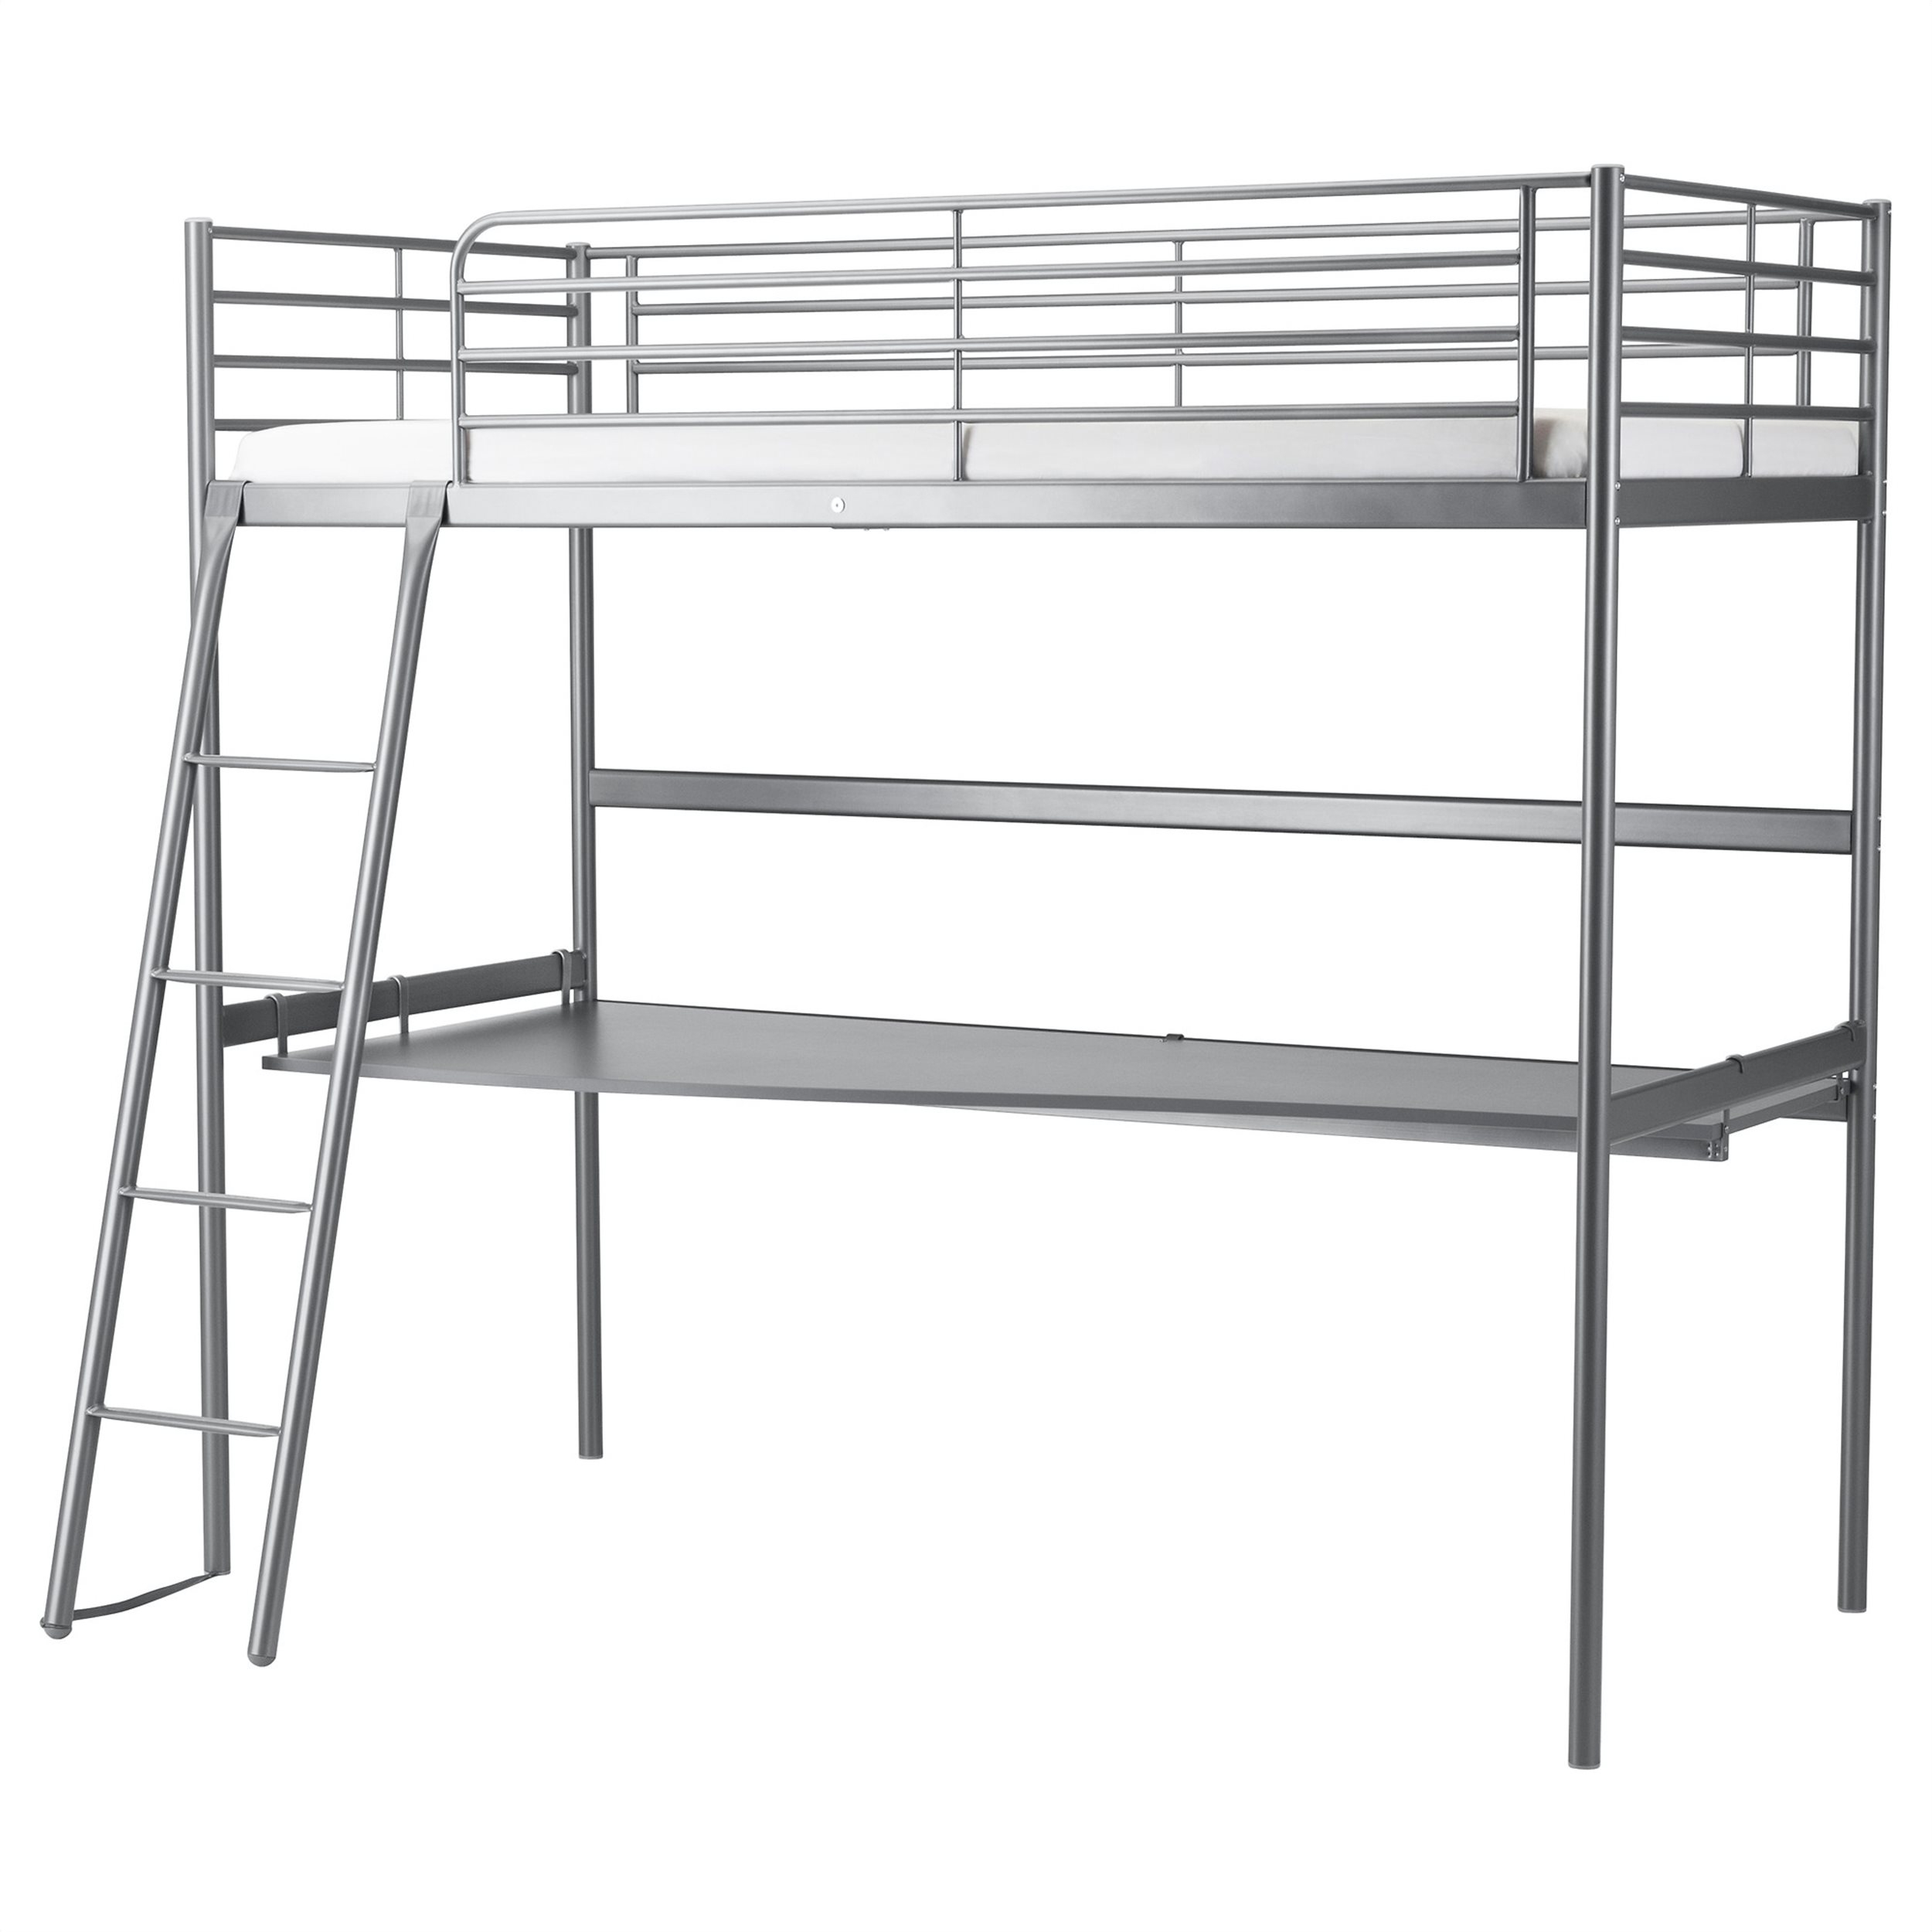 Rijpen Fauteuil partner IKEA Loft Beds - To Buy or Not in IKEA? 5 Reviews - VisualHunt